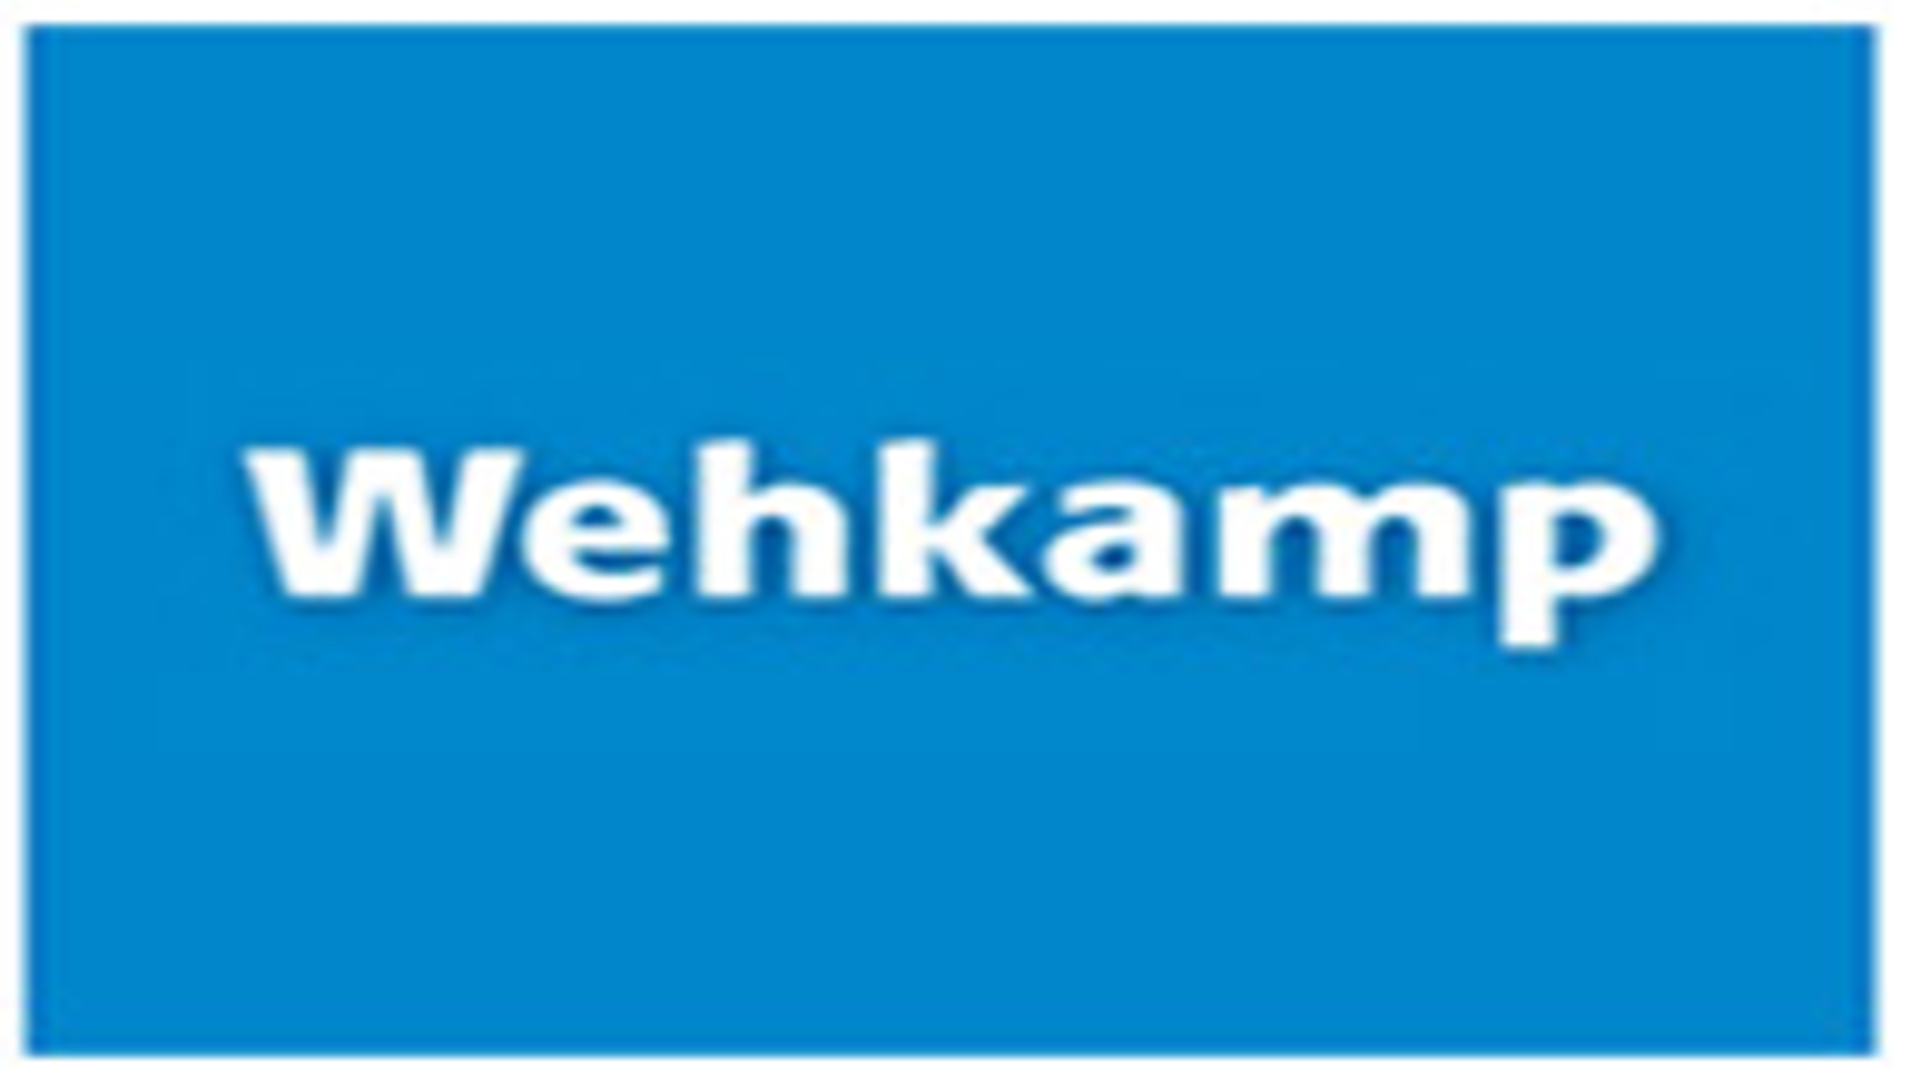 wehkamp-logo_01.jpg